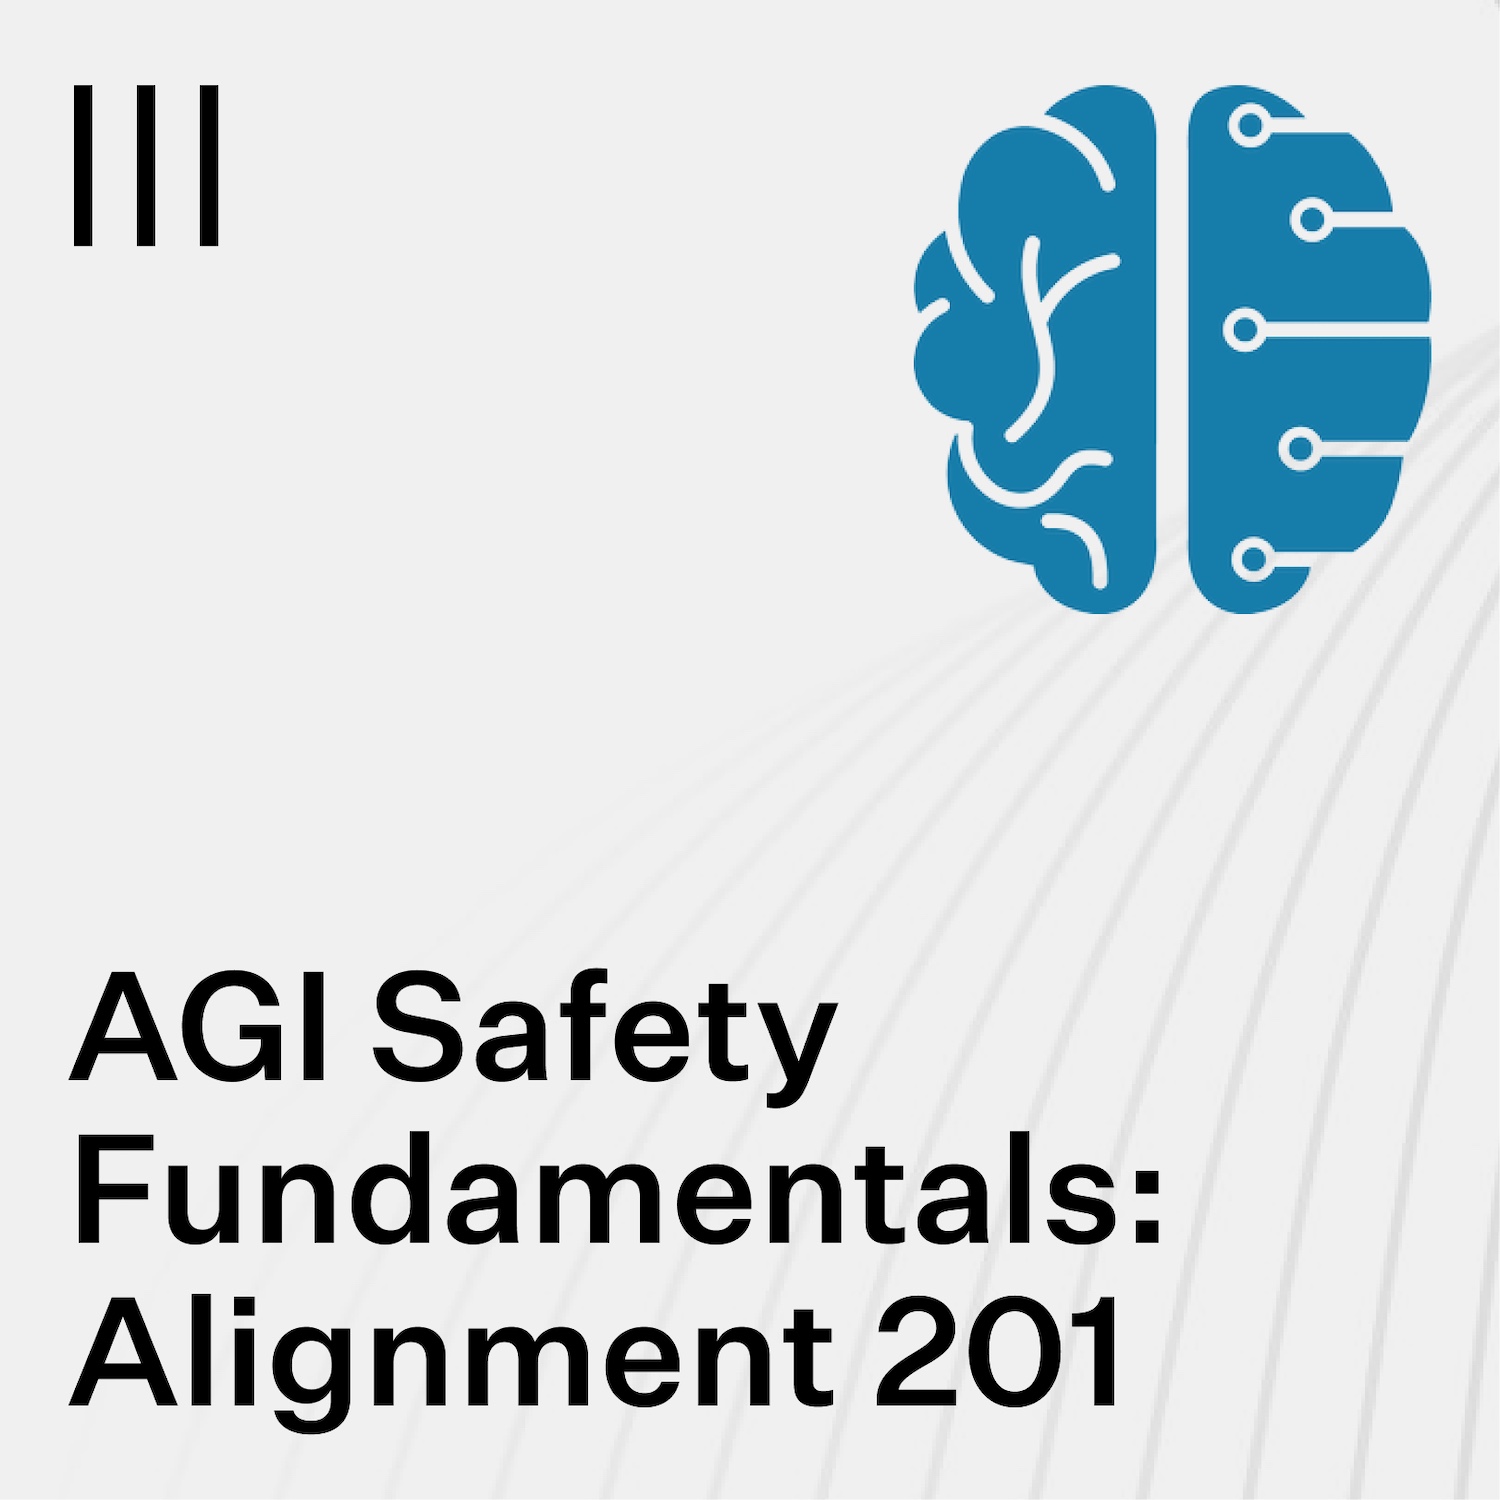 AGI Safety Fundamentals: Alignment 201